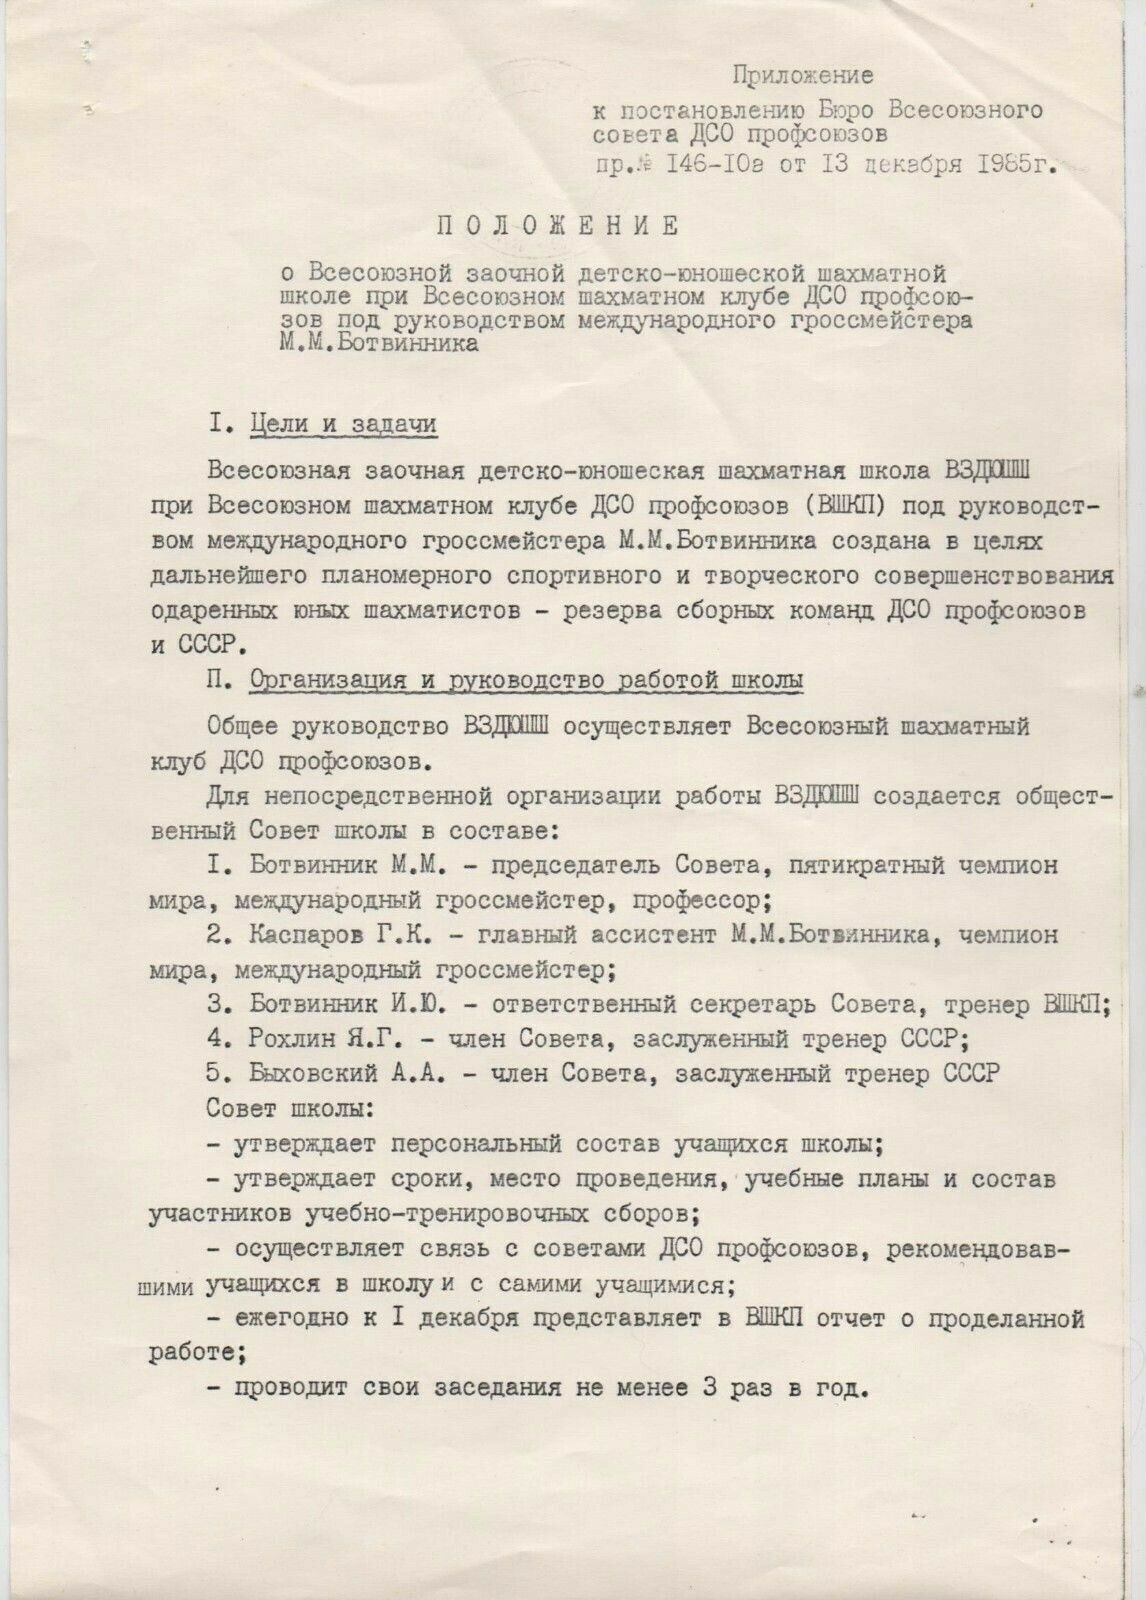 11426.Resolution: Establishing Union Junior Chess School under direction of Botvinnik